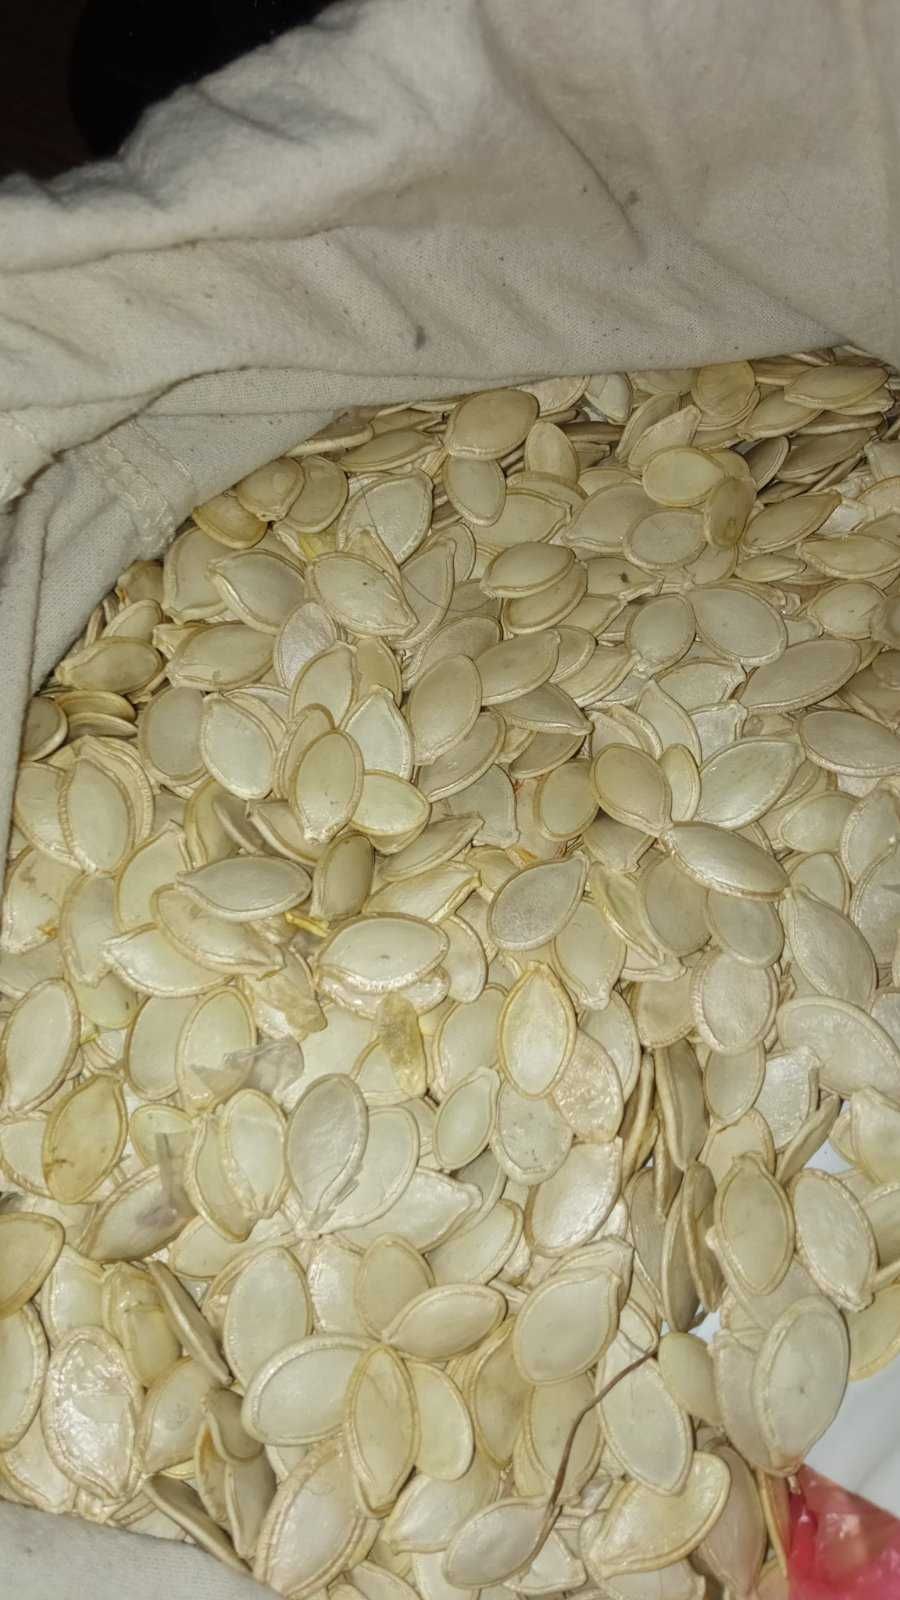 Сортове сире гарбузове насіння гарбуза семечка тыквы, 100 грам